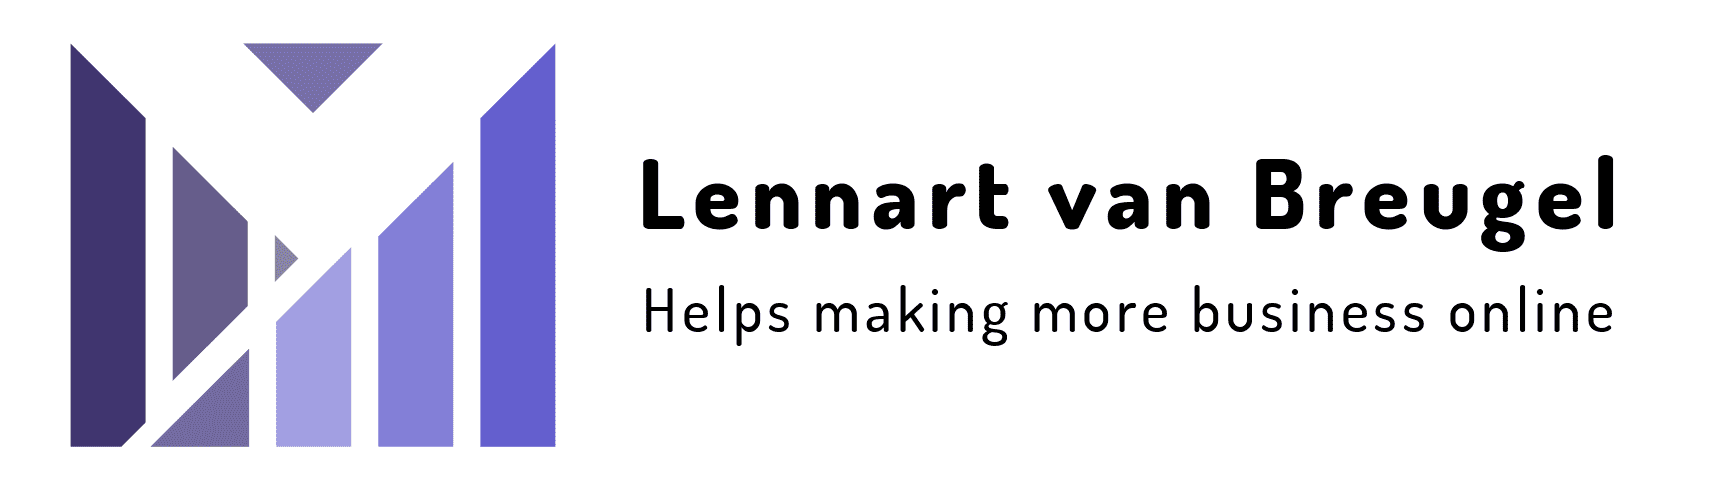 Lennart van Breugel | Online Marketing Expert